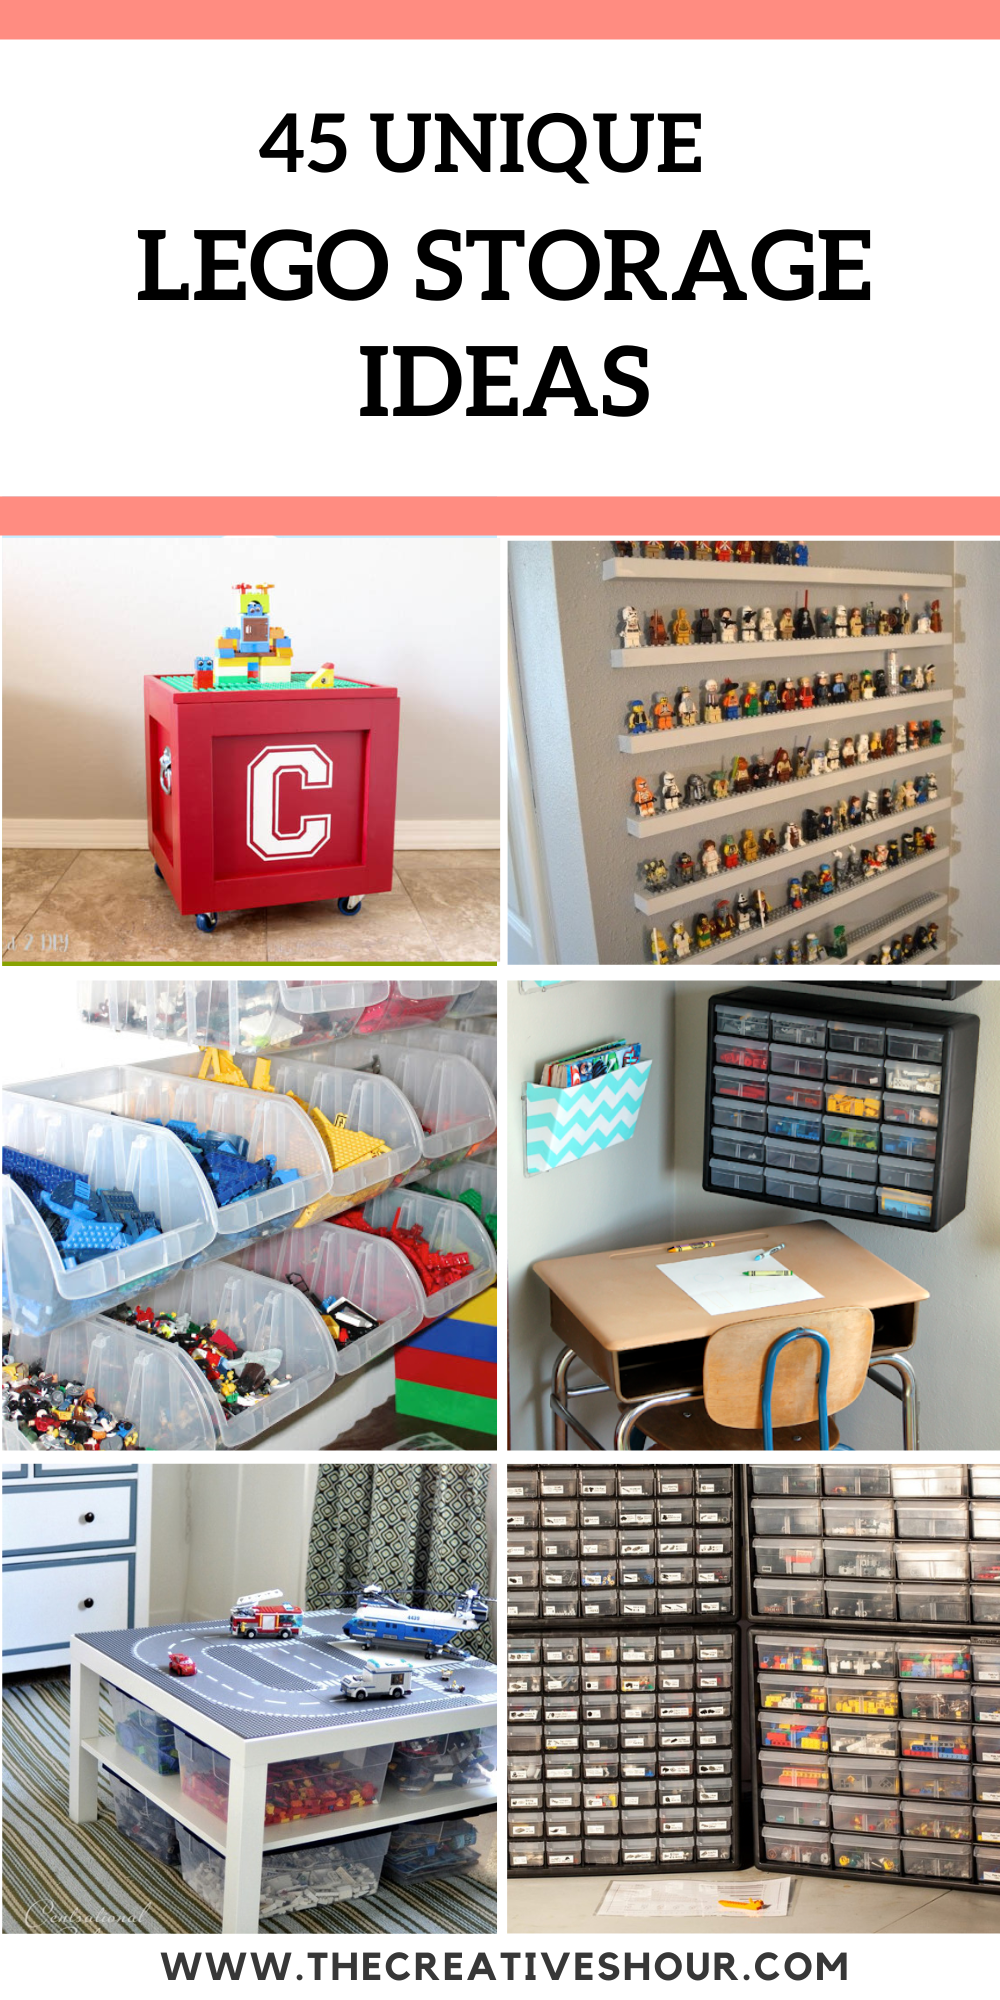 37 LEGO Storage & Organization Ideas • Kids Activities Blog